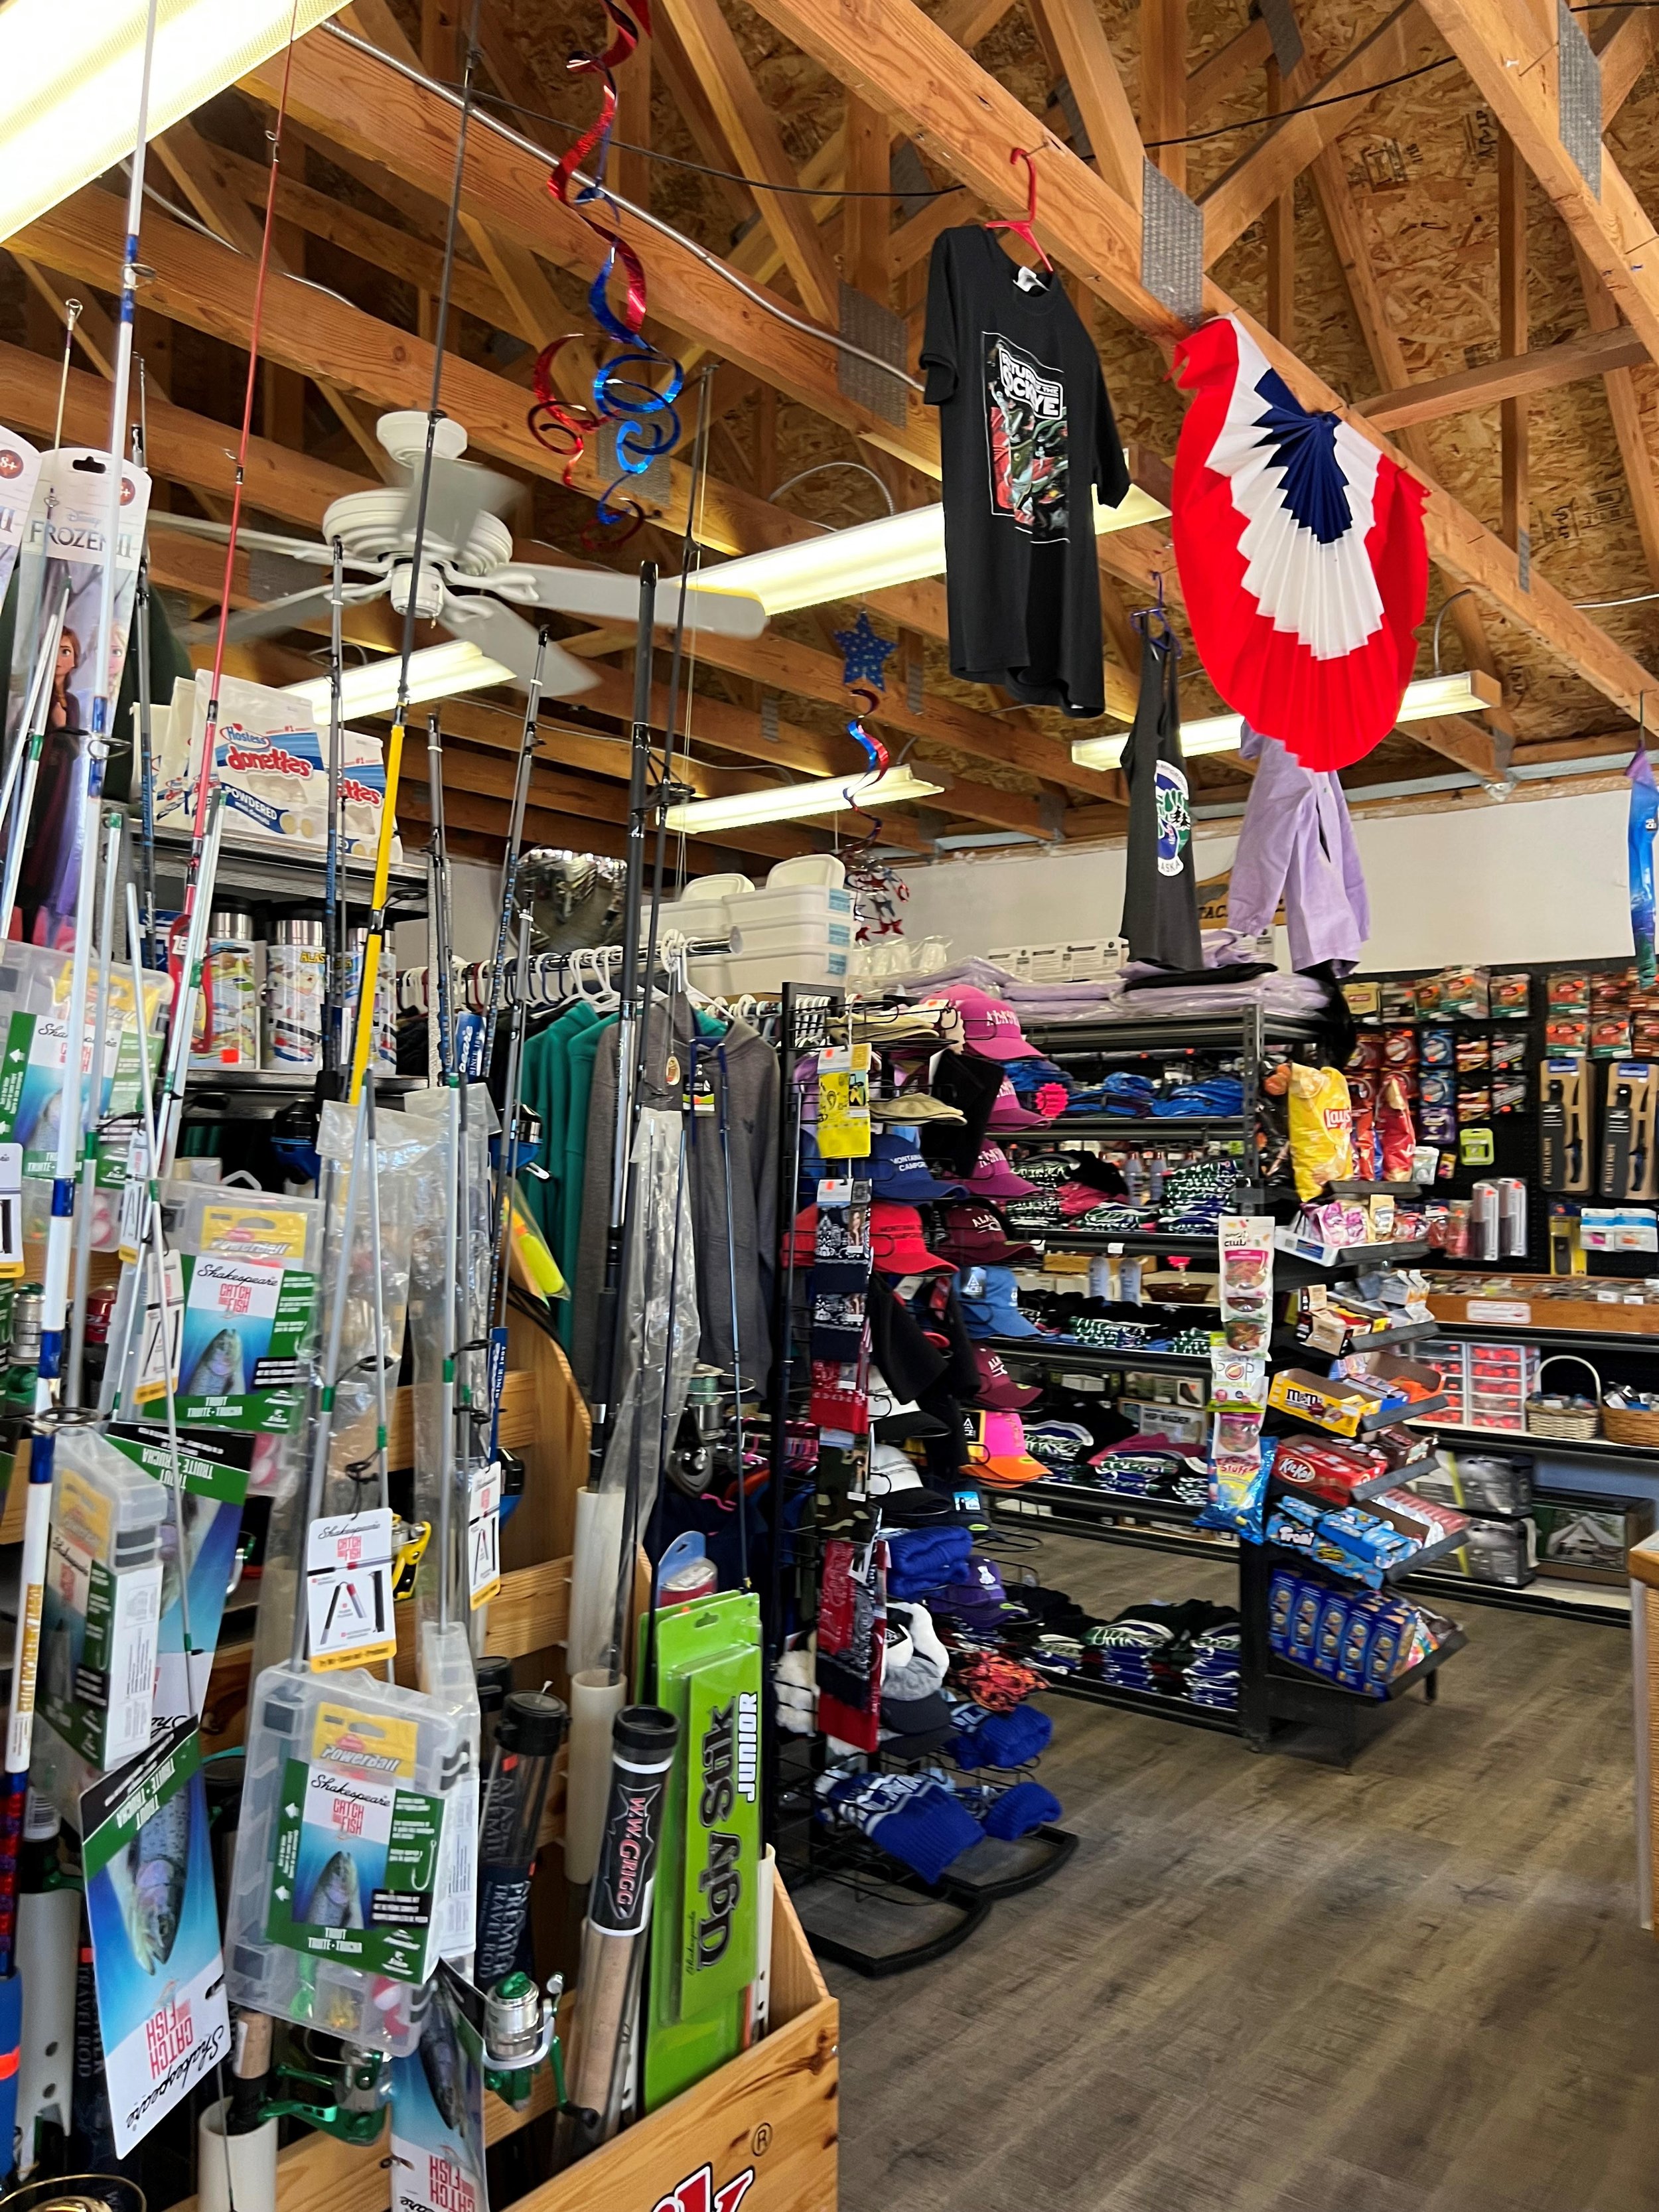 Store — Montana Creek Campground